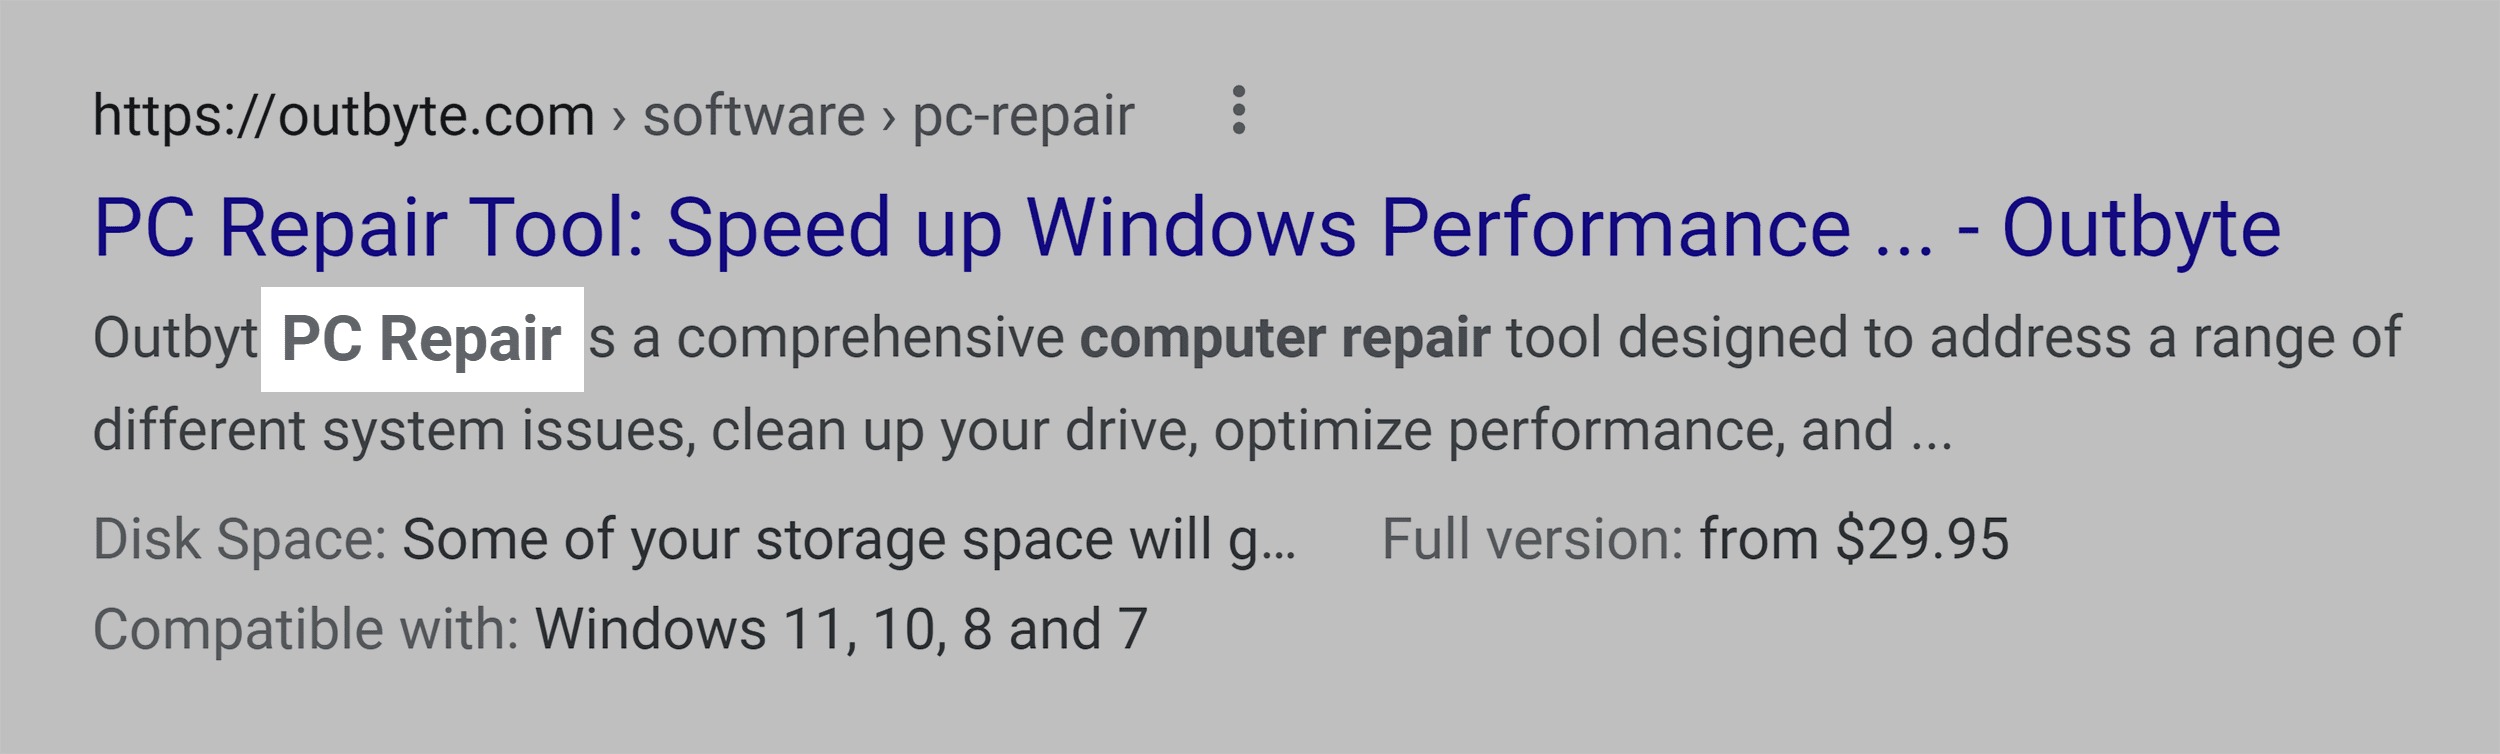 PC repair bolded in SERP